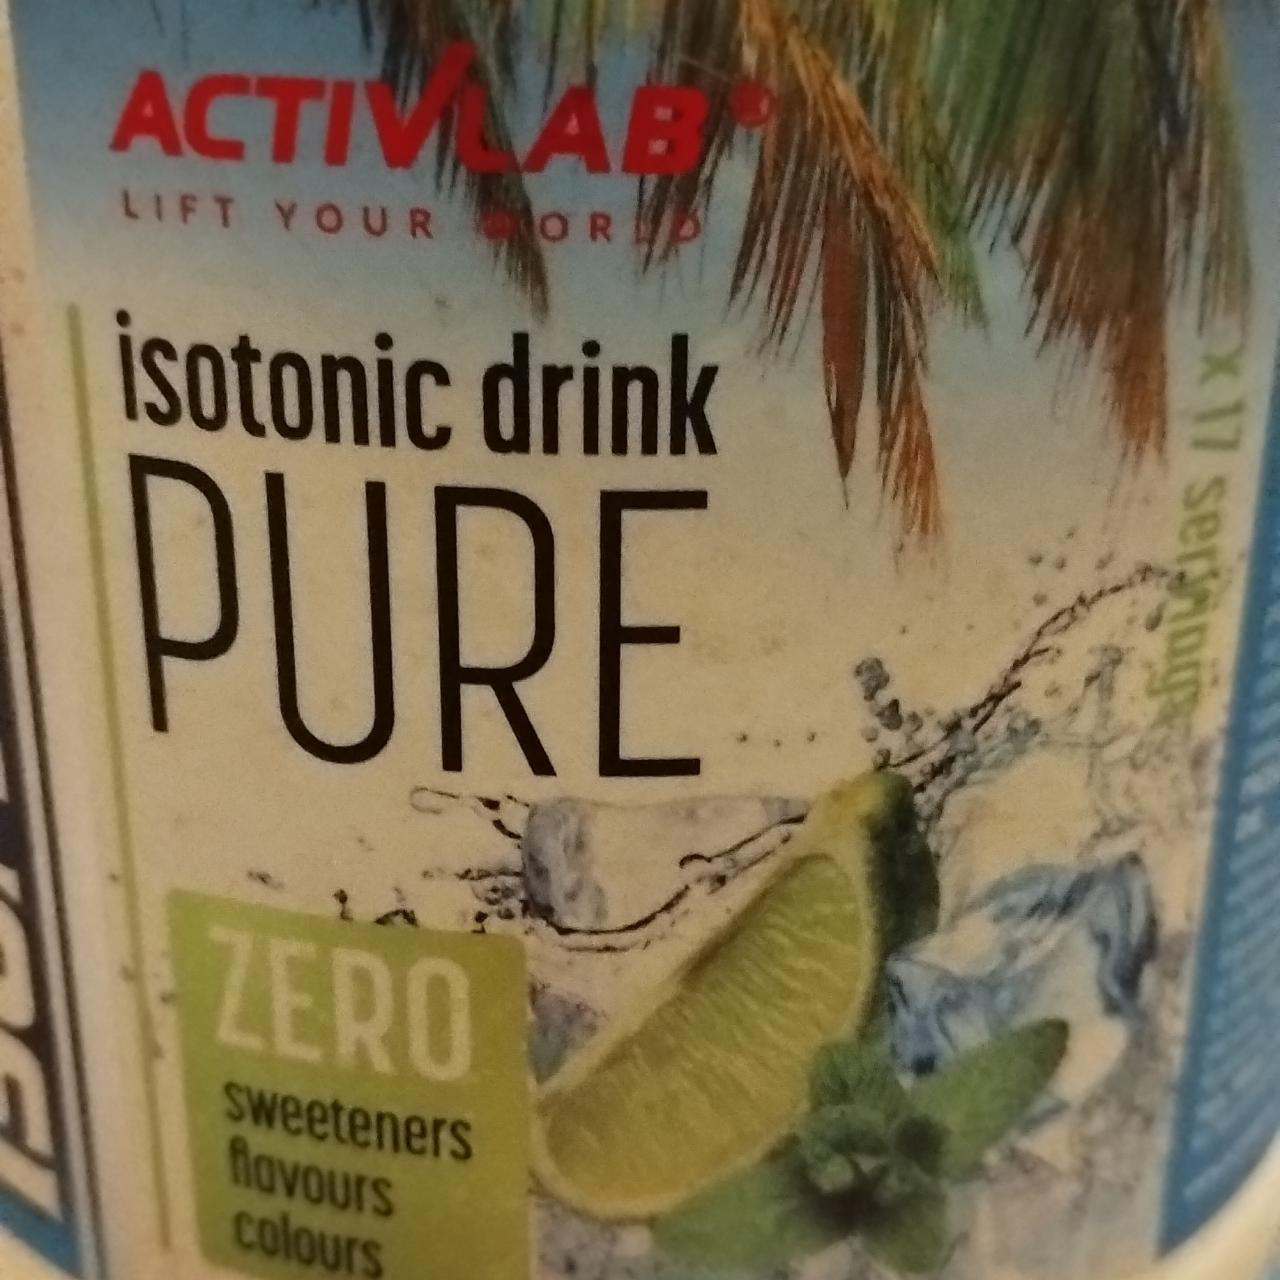 Zdjęcia - Isotonic drink pure limonkowy Activlab